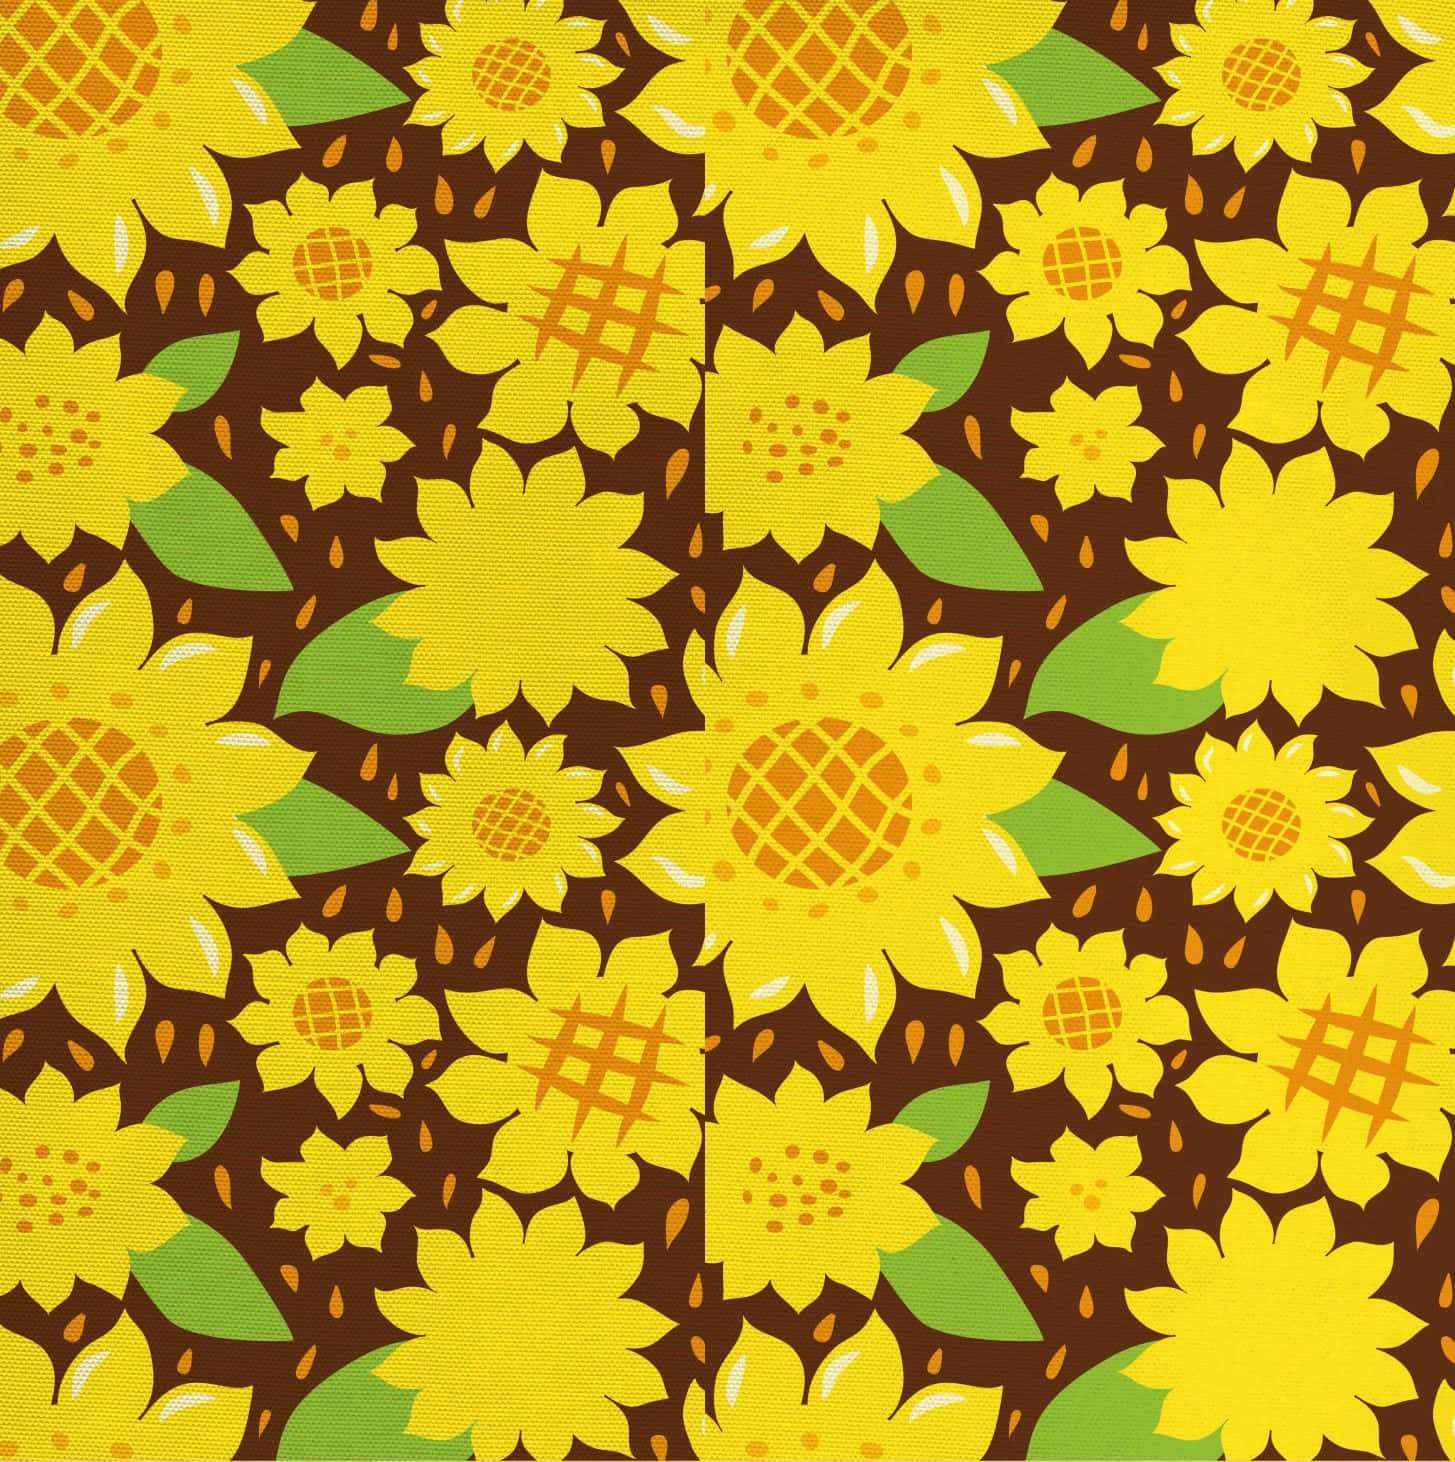 Sunflowers On Brown Fabric By Sassy_sassy On Spoonflower - Custom Fabric